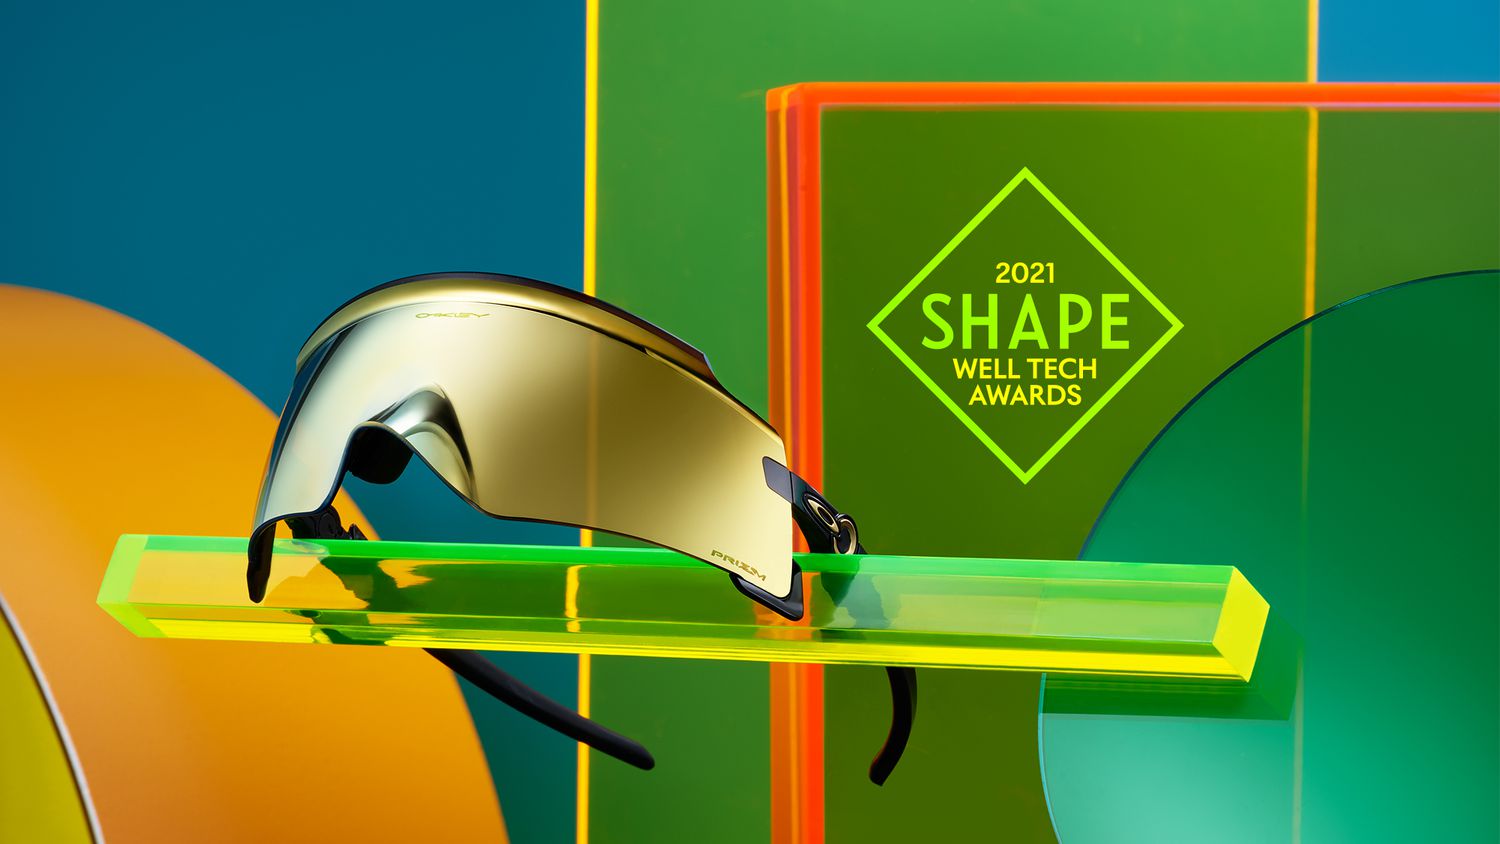 The 2021 Shape Well Tech Awards